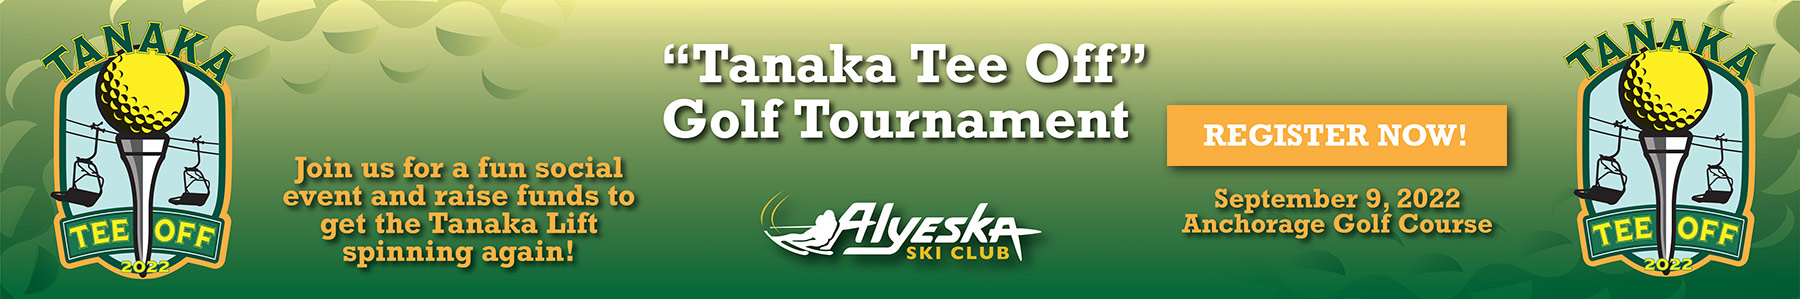 Tanaka Tee Off Golf Tournament - Sept. 9, 2022